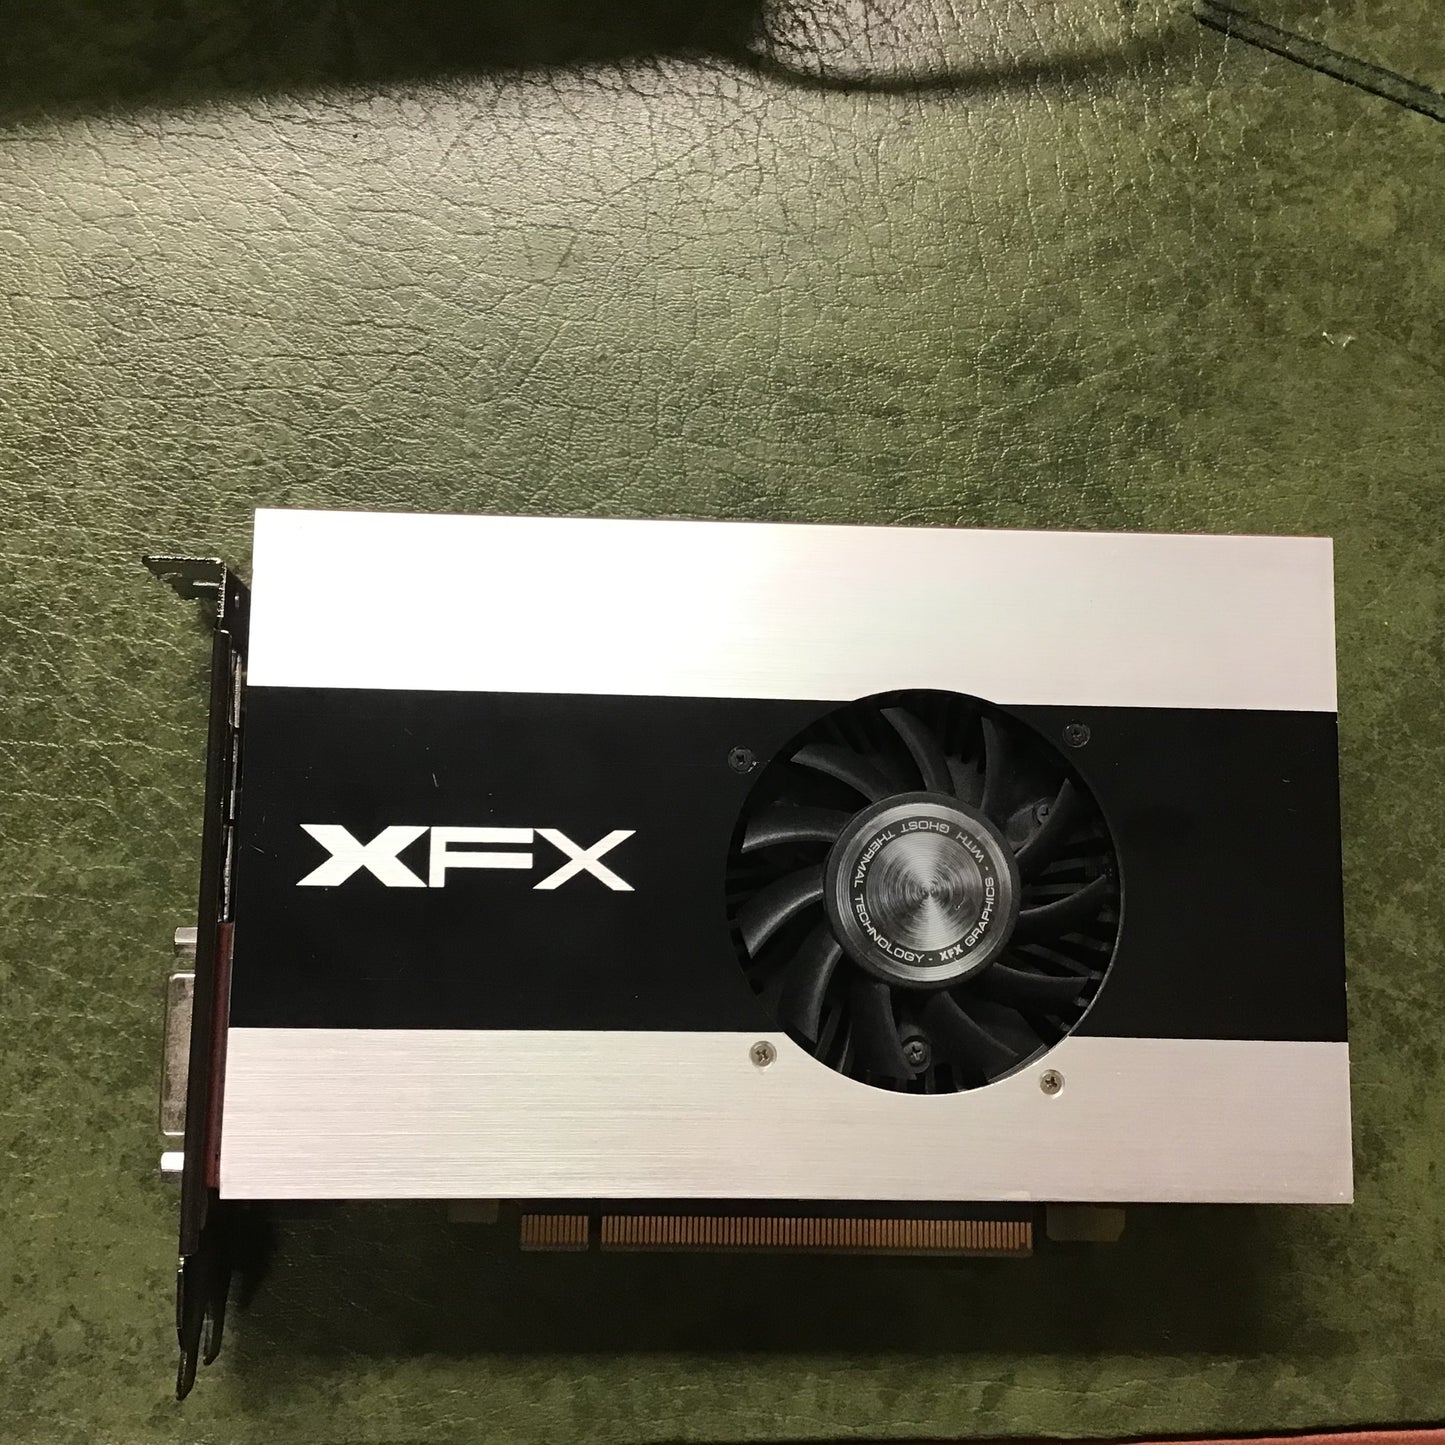 XFX R7700 Ghost Series 2GB